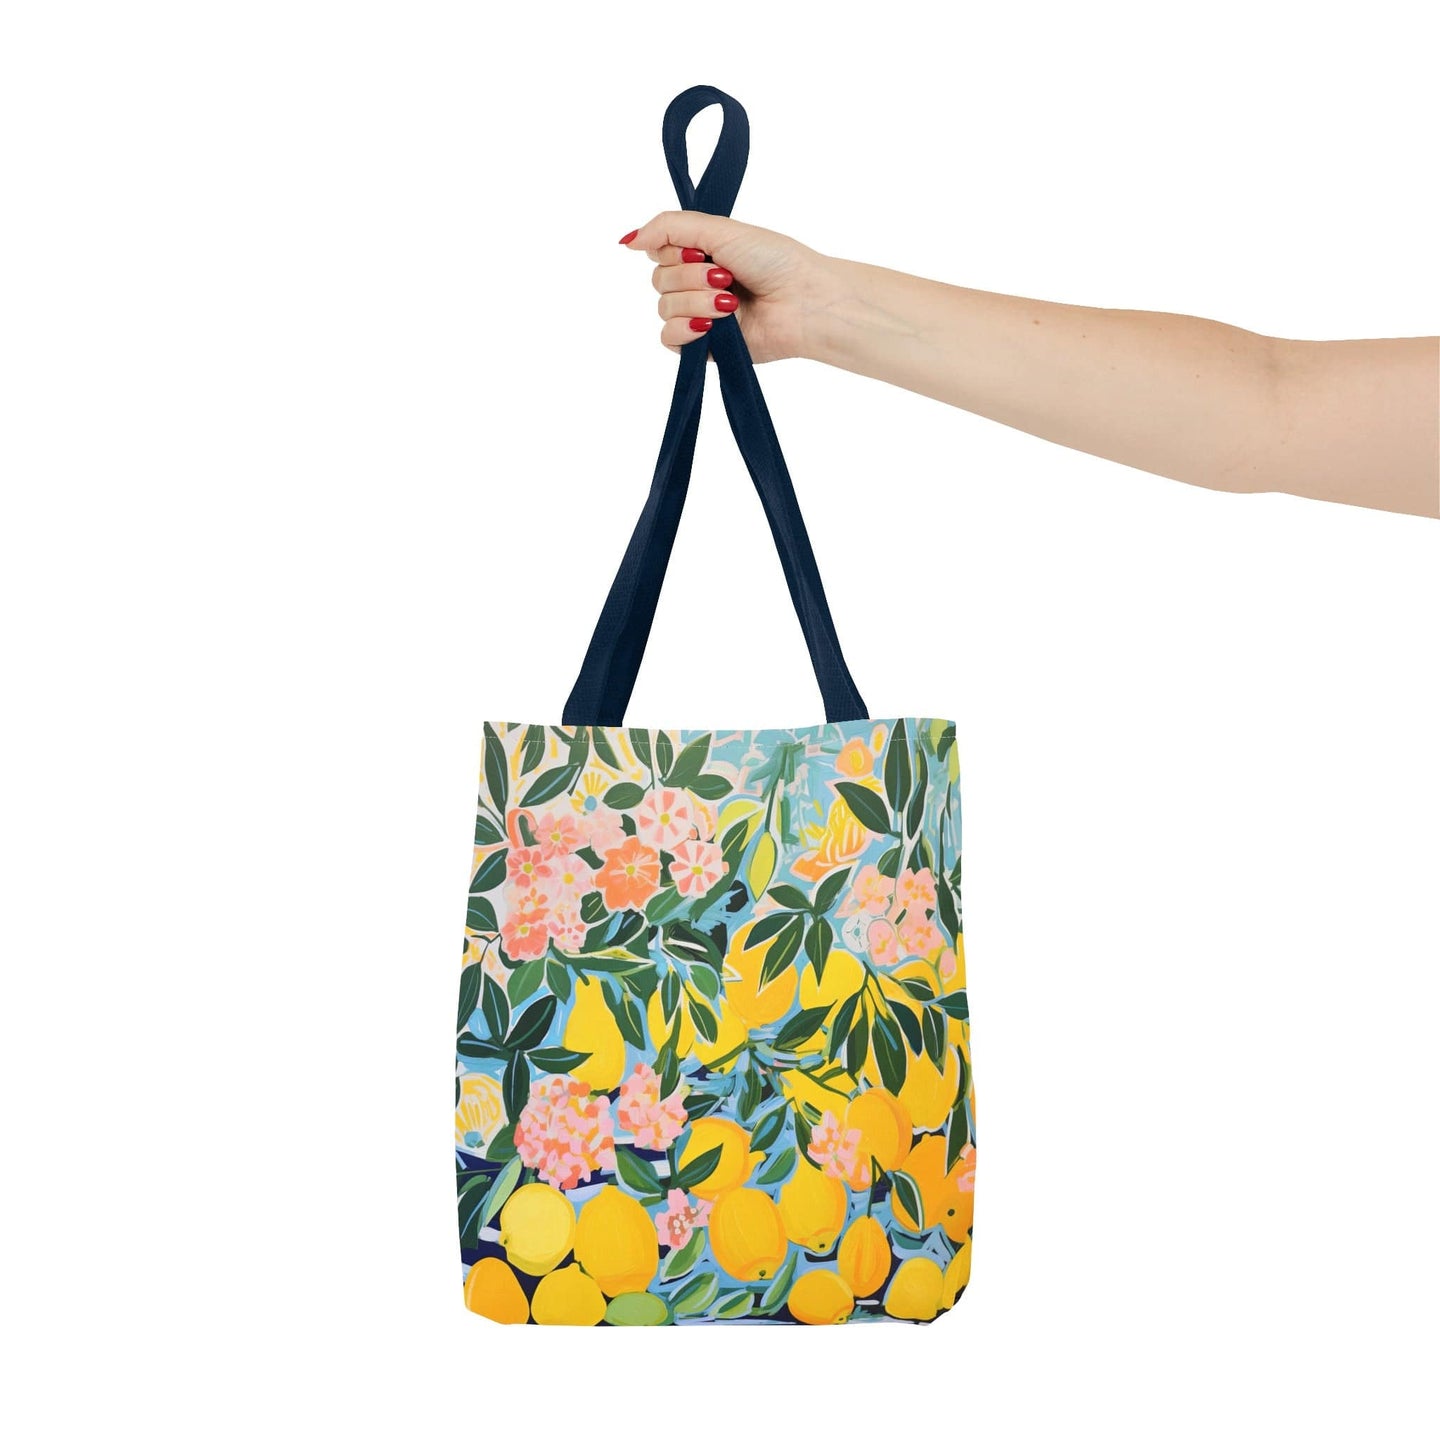 Free Gift - Lemon Tote Bag